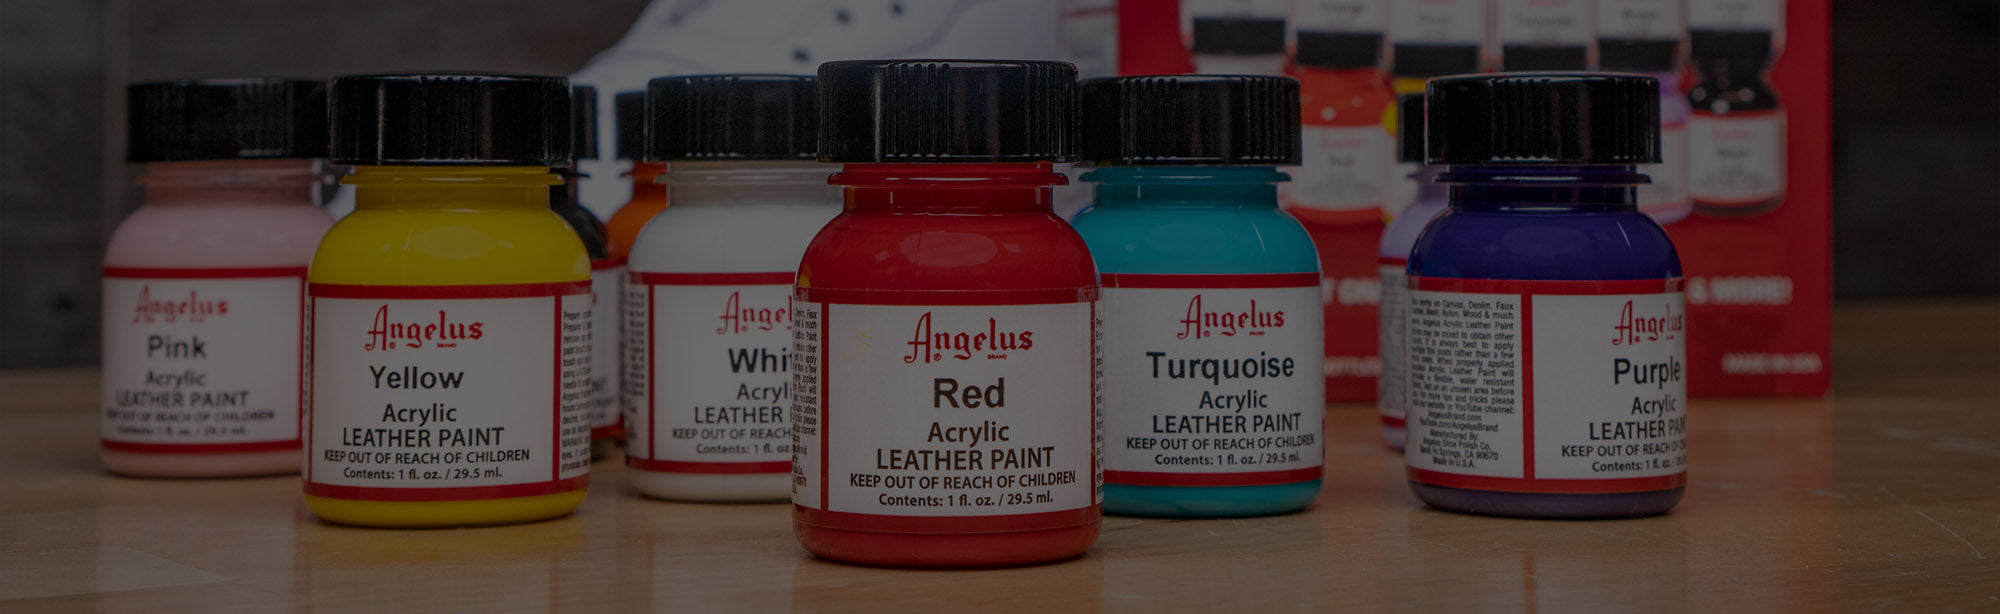  Angelus Leather Paint Kit- Basics Starter Kit Includes